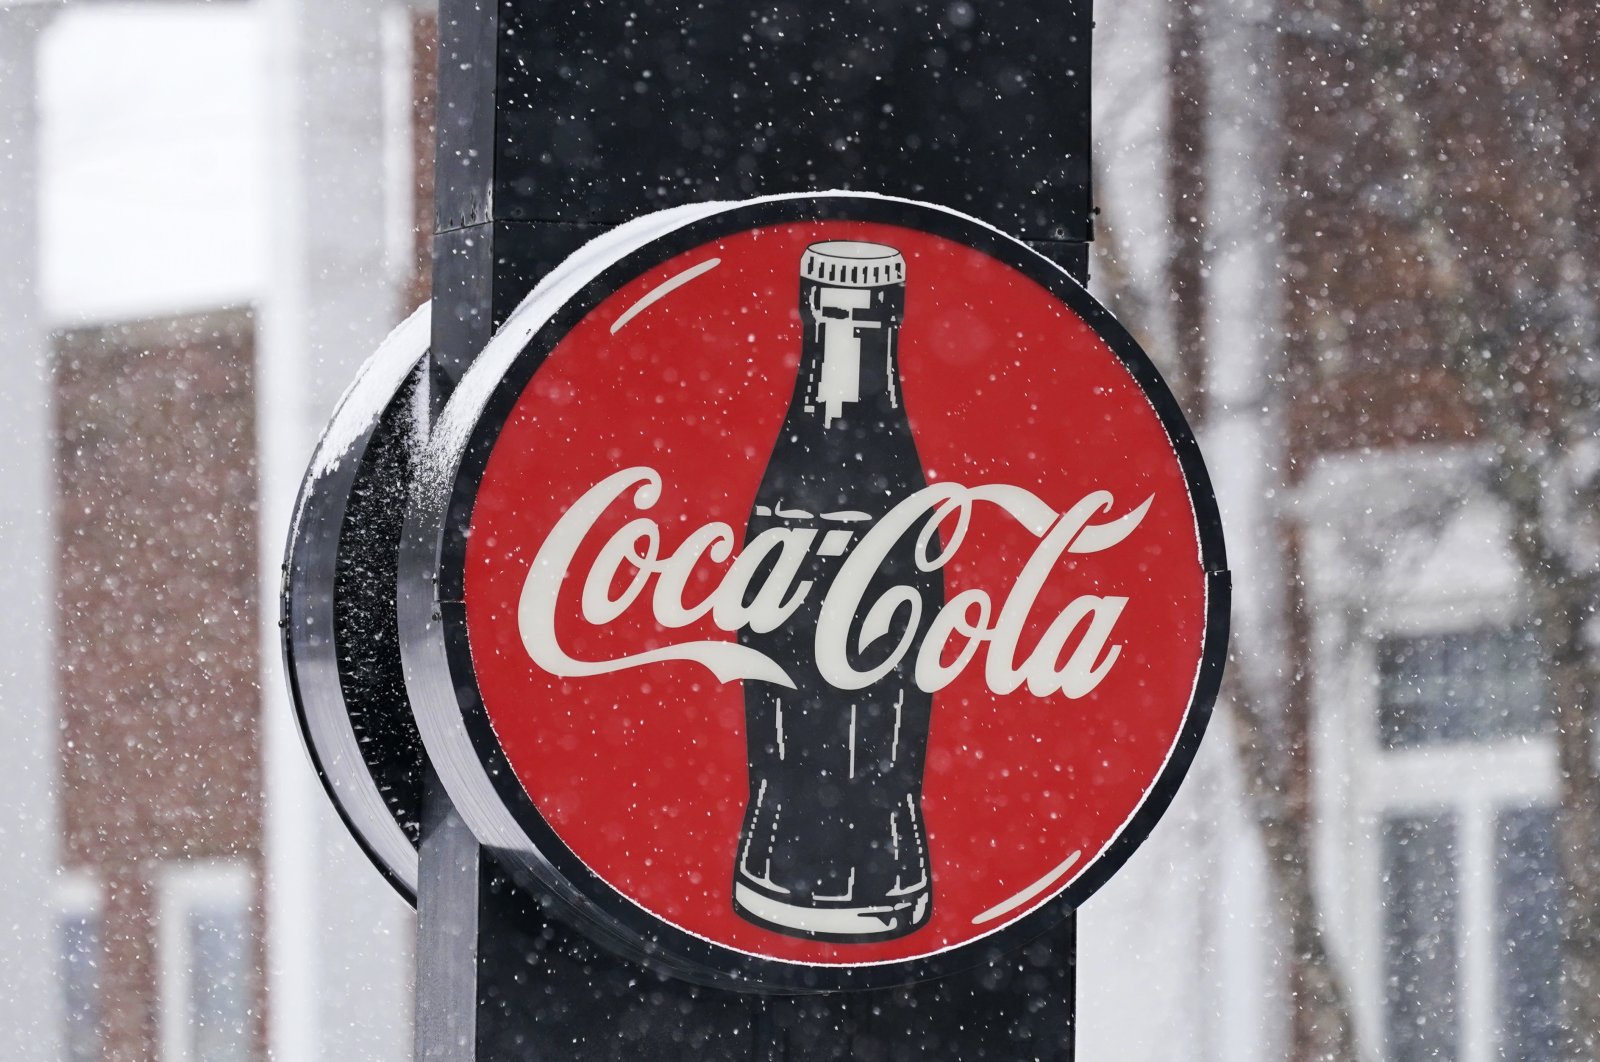 A Coca-Cola sign hangs outside a Coca-Cola distributor, in Bedford, Ohio, US, Feb. 9, 2021. (AP Photo)